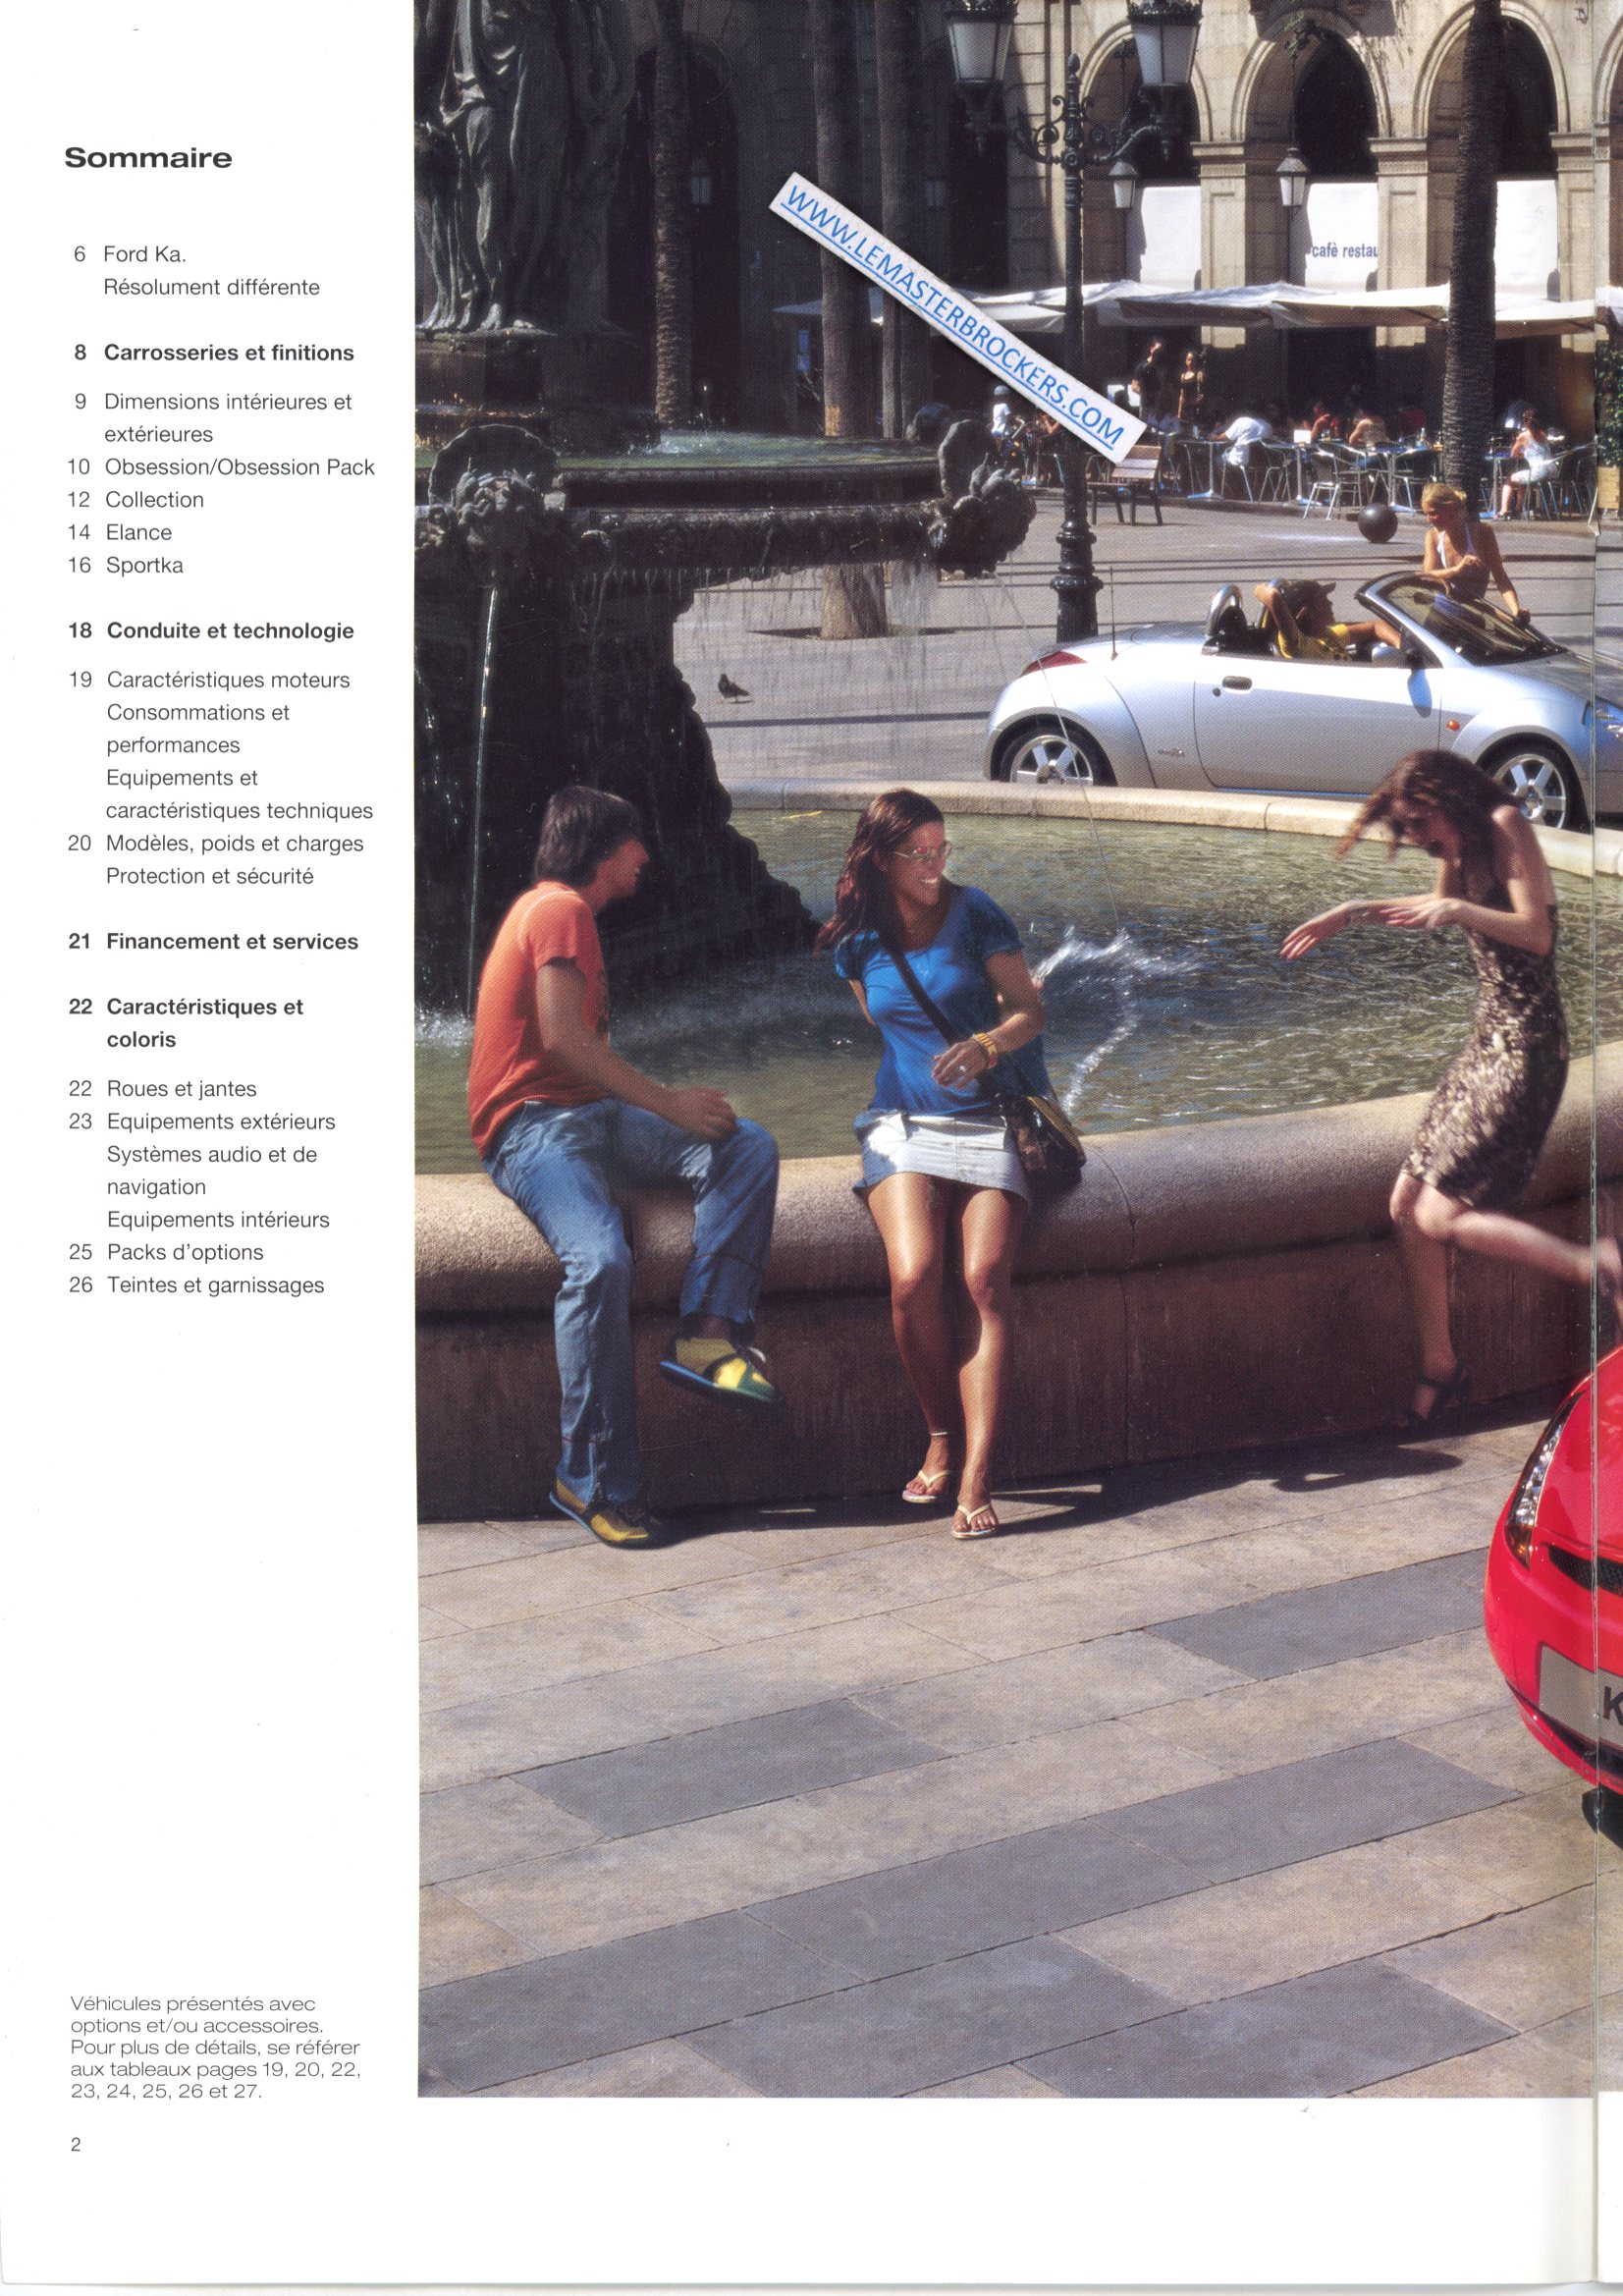 brochure FORD KA OBSESSION COLLECTION ELANCE SPORTKA 2003